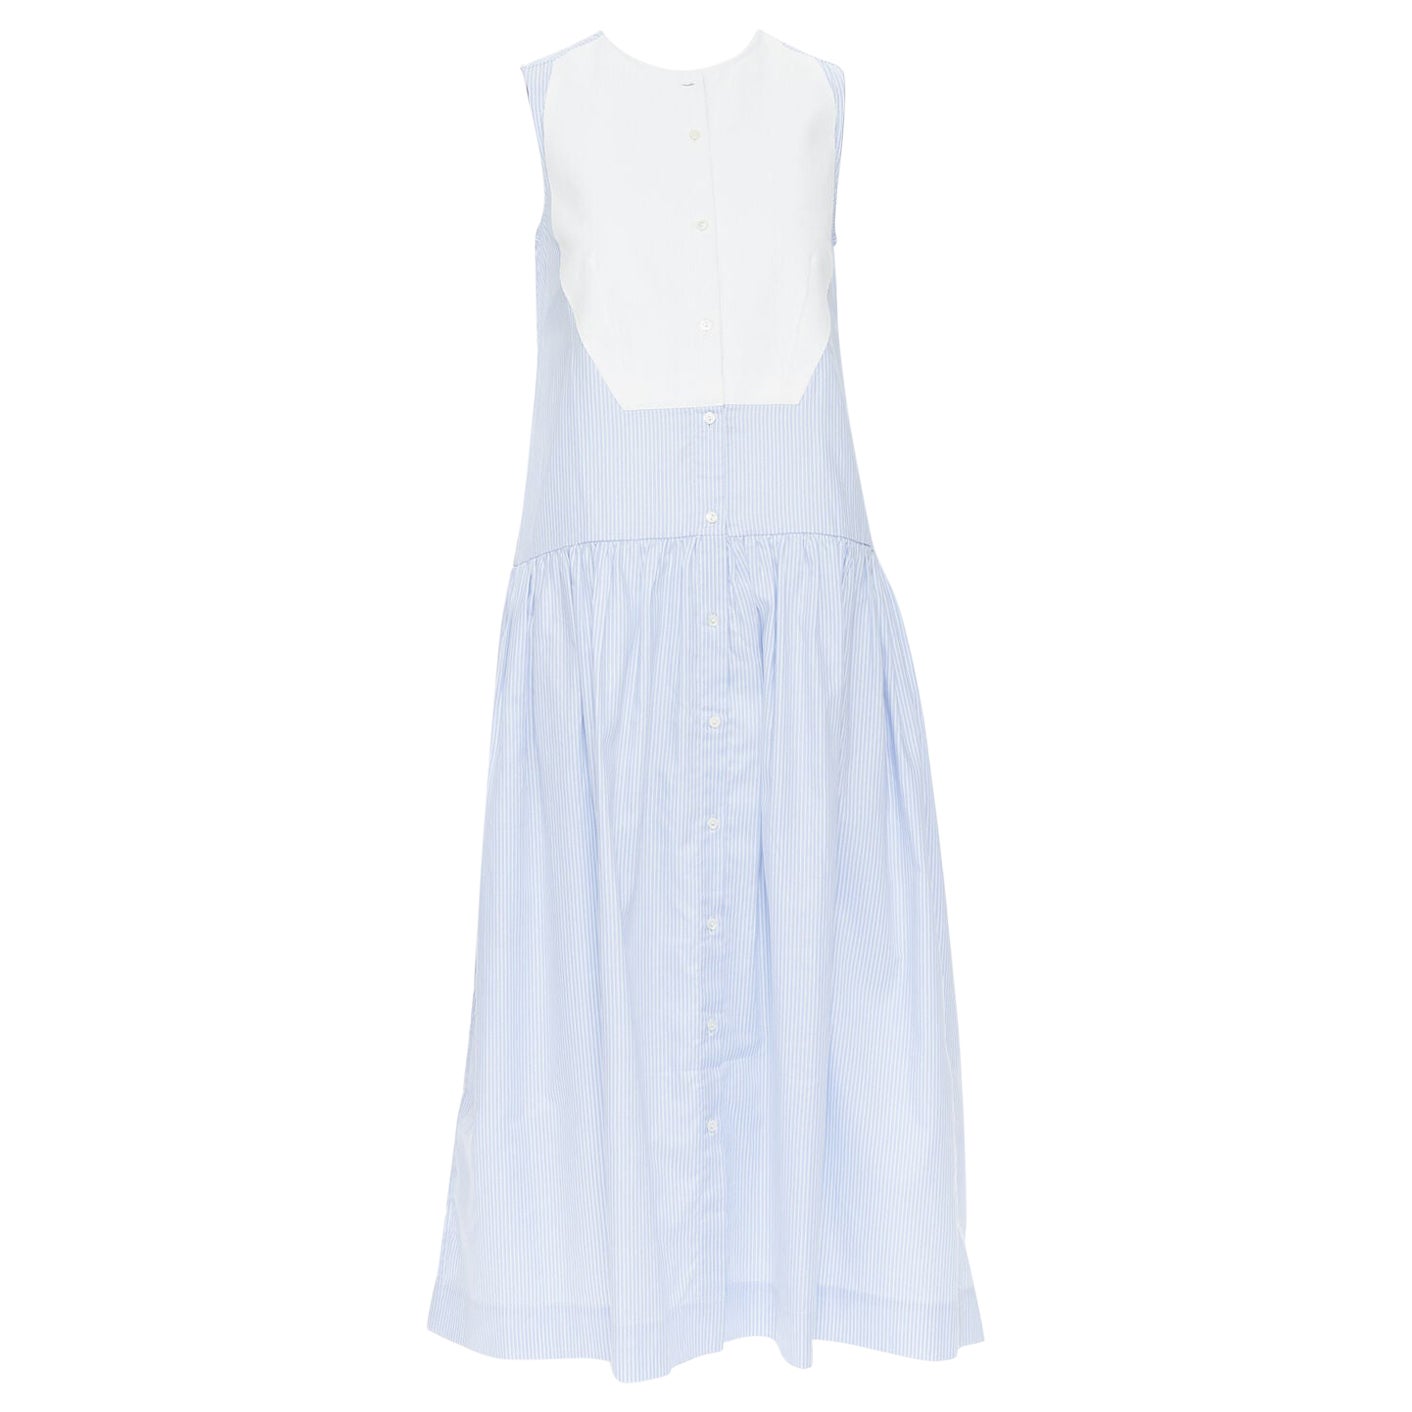 PALMER HARDING 100% cotton white bib front blue striped summer dress UK8 XS For Sale